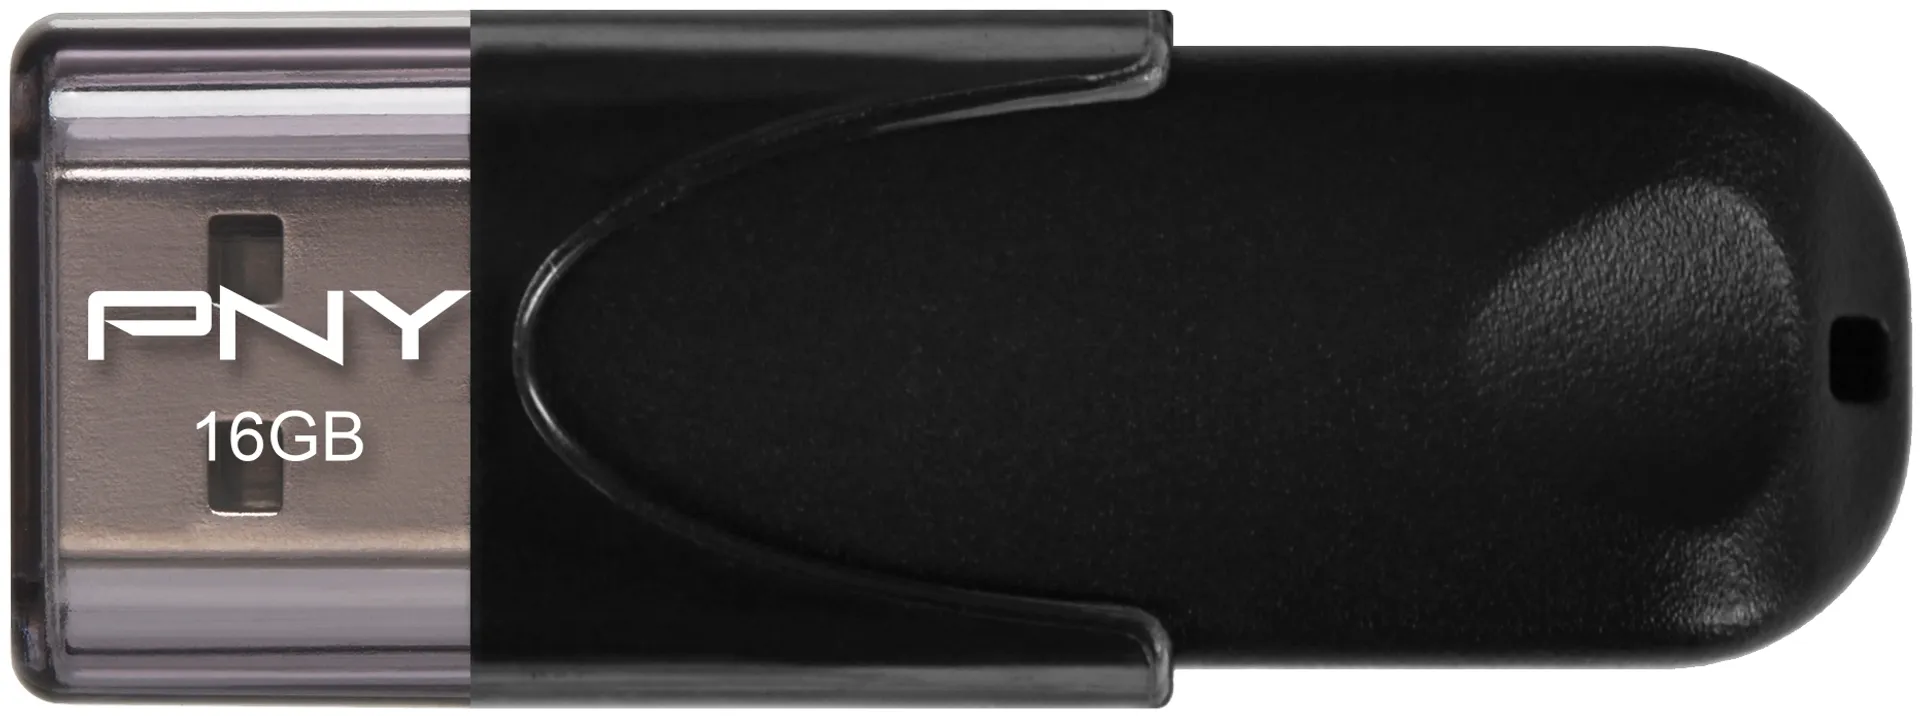 PNY muistitikku USB 2.0 16 GB - 2